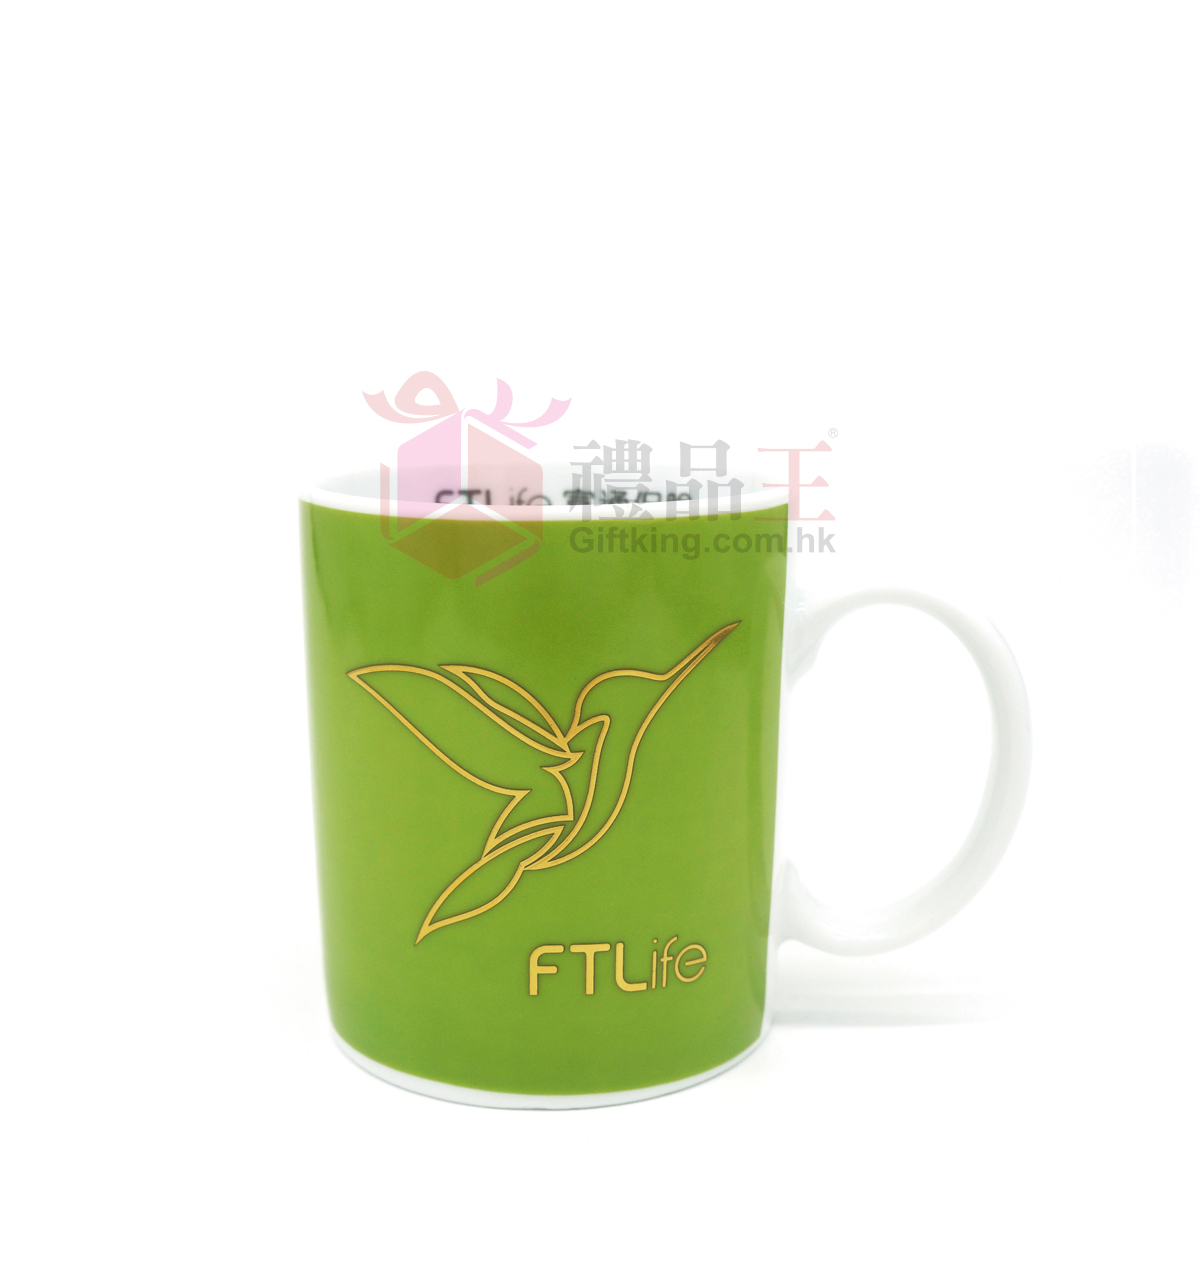 FTLife  ceramic mug (Advertising gift)